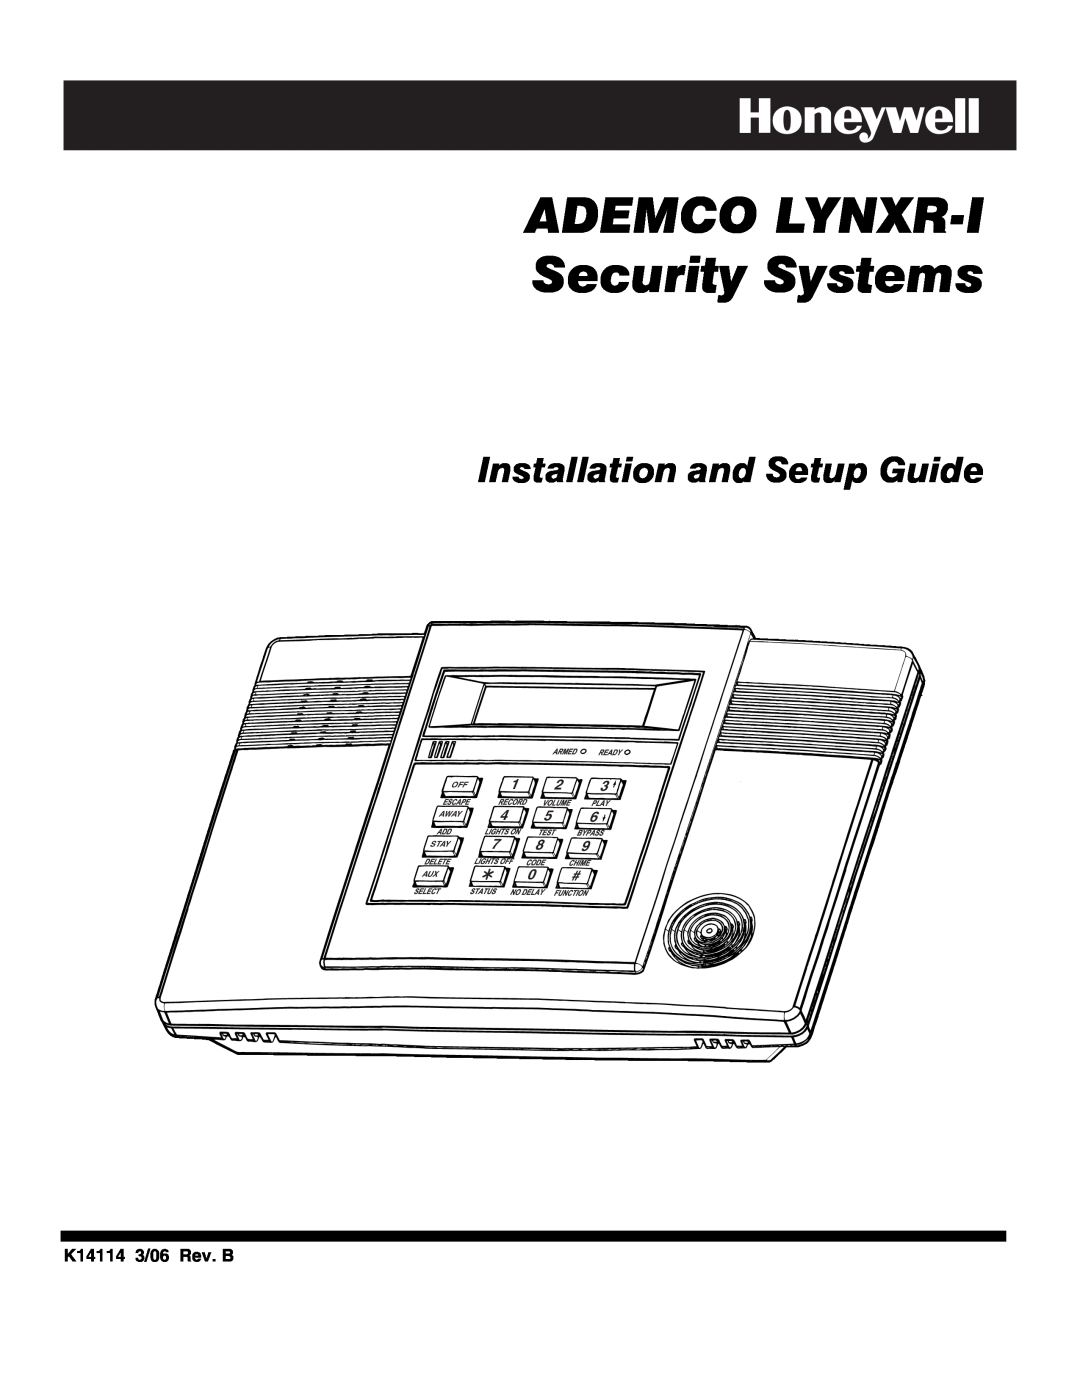 Honeywell K14114 3/06 Rev.B setup guide K14114 3/06 Rev. B, ADEMCO LYNXR-I Security Systems, Installation and Setup Guide 